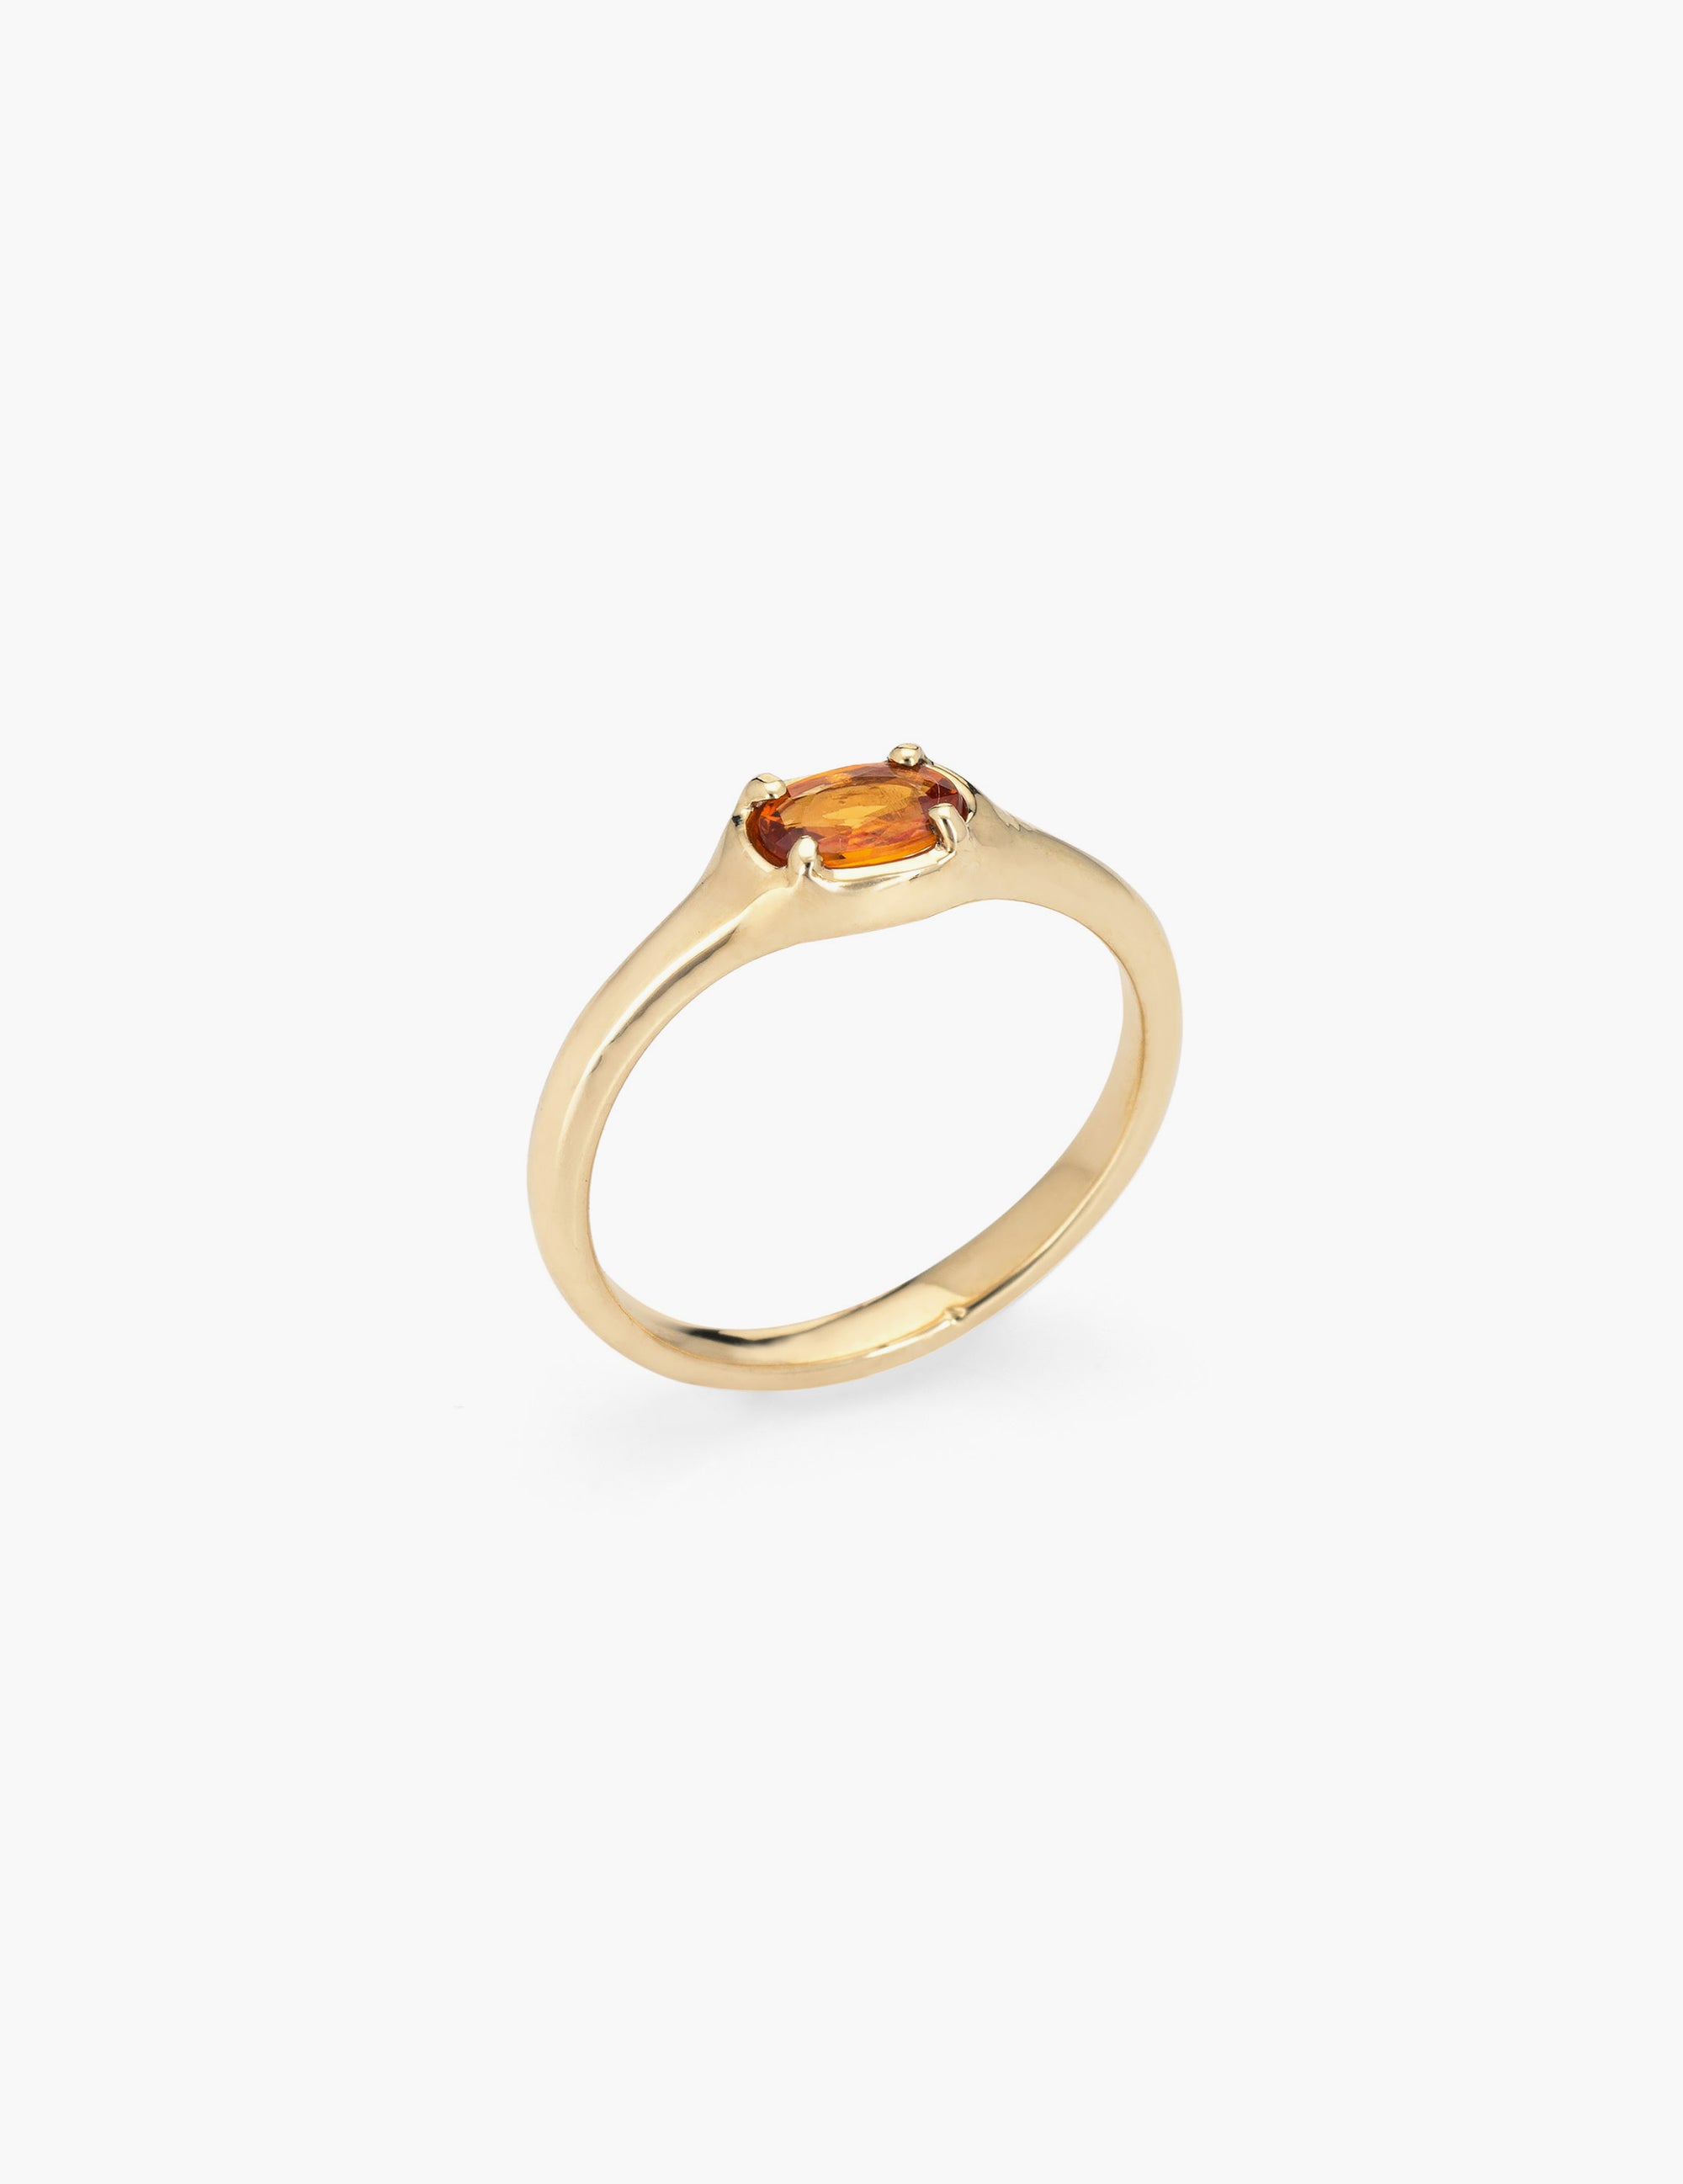 Orange Sapphire Ring